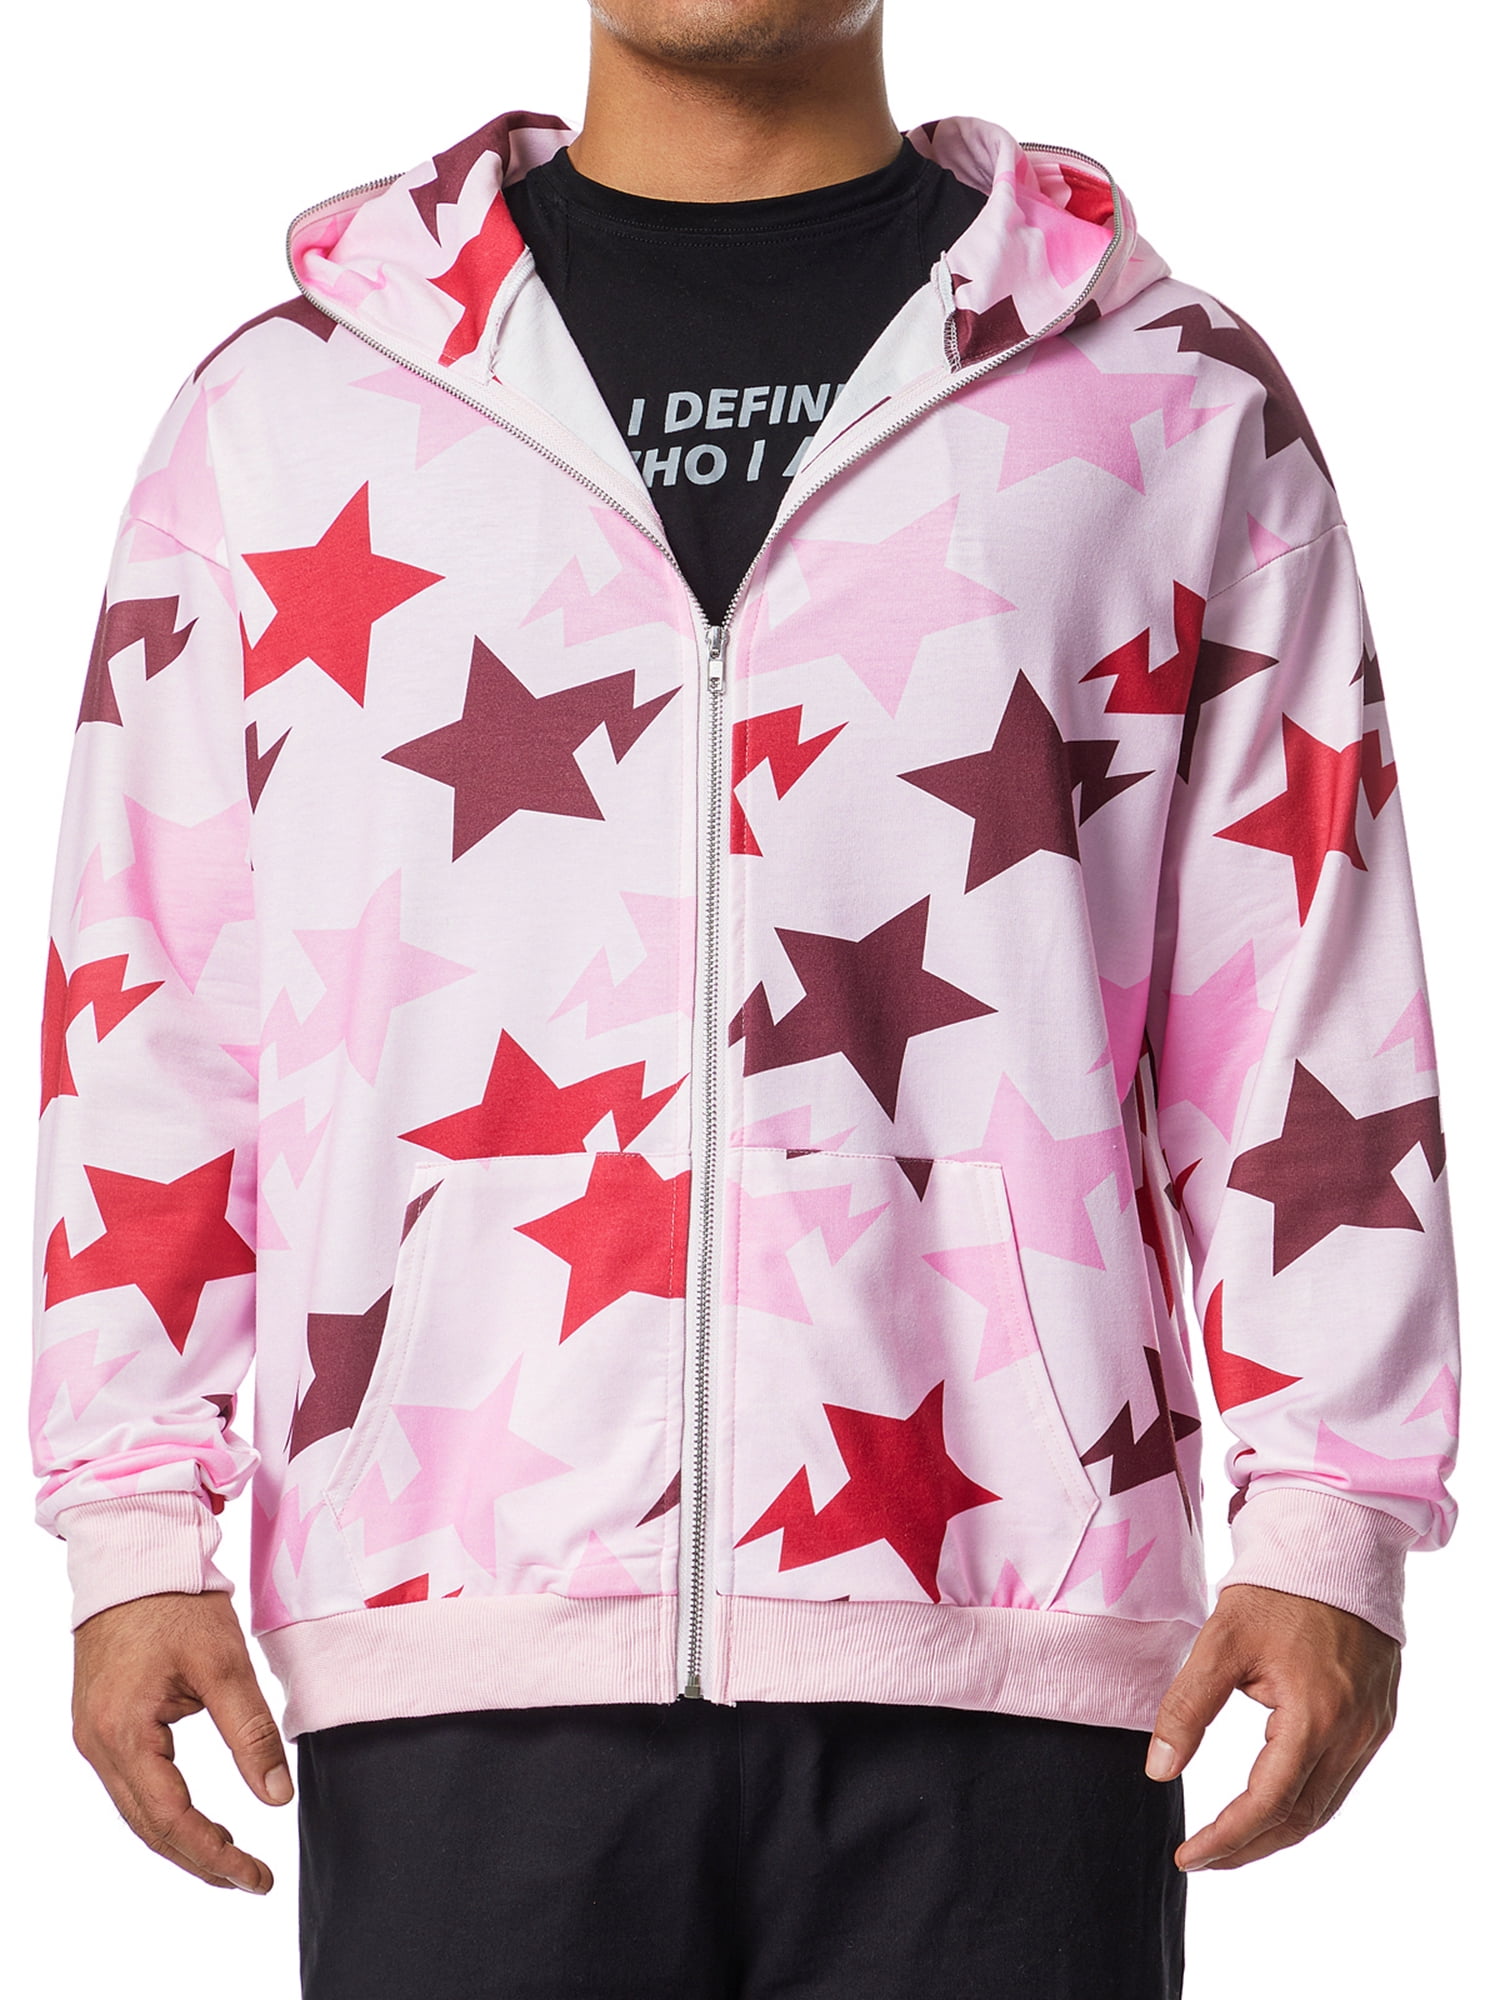 wybzd Men Stars Print Long Sleeve Hooded Sweatshirt 2000s Aesthetic Clothes  Zip Up Streetwear Fairycore Grunge Jacket Pink XL 